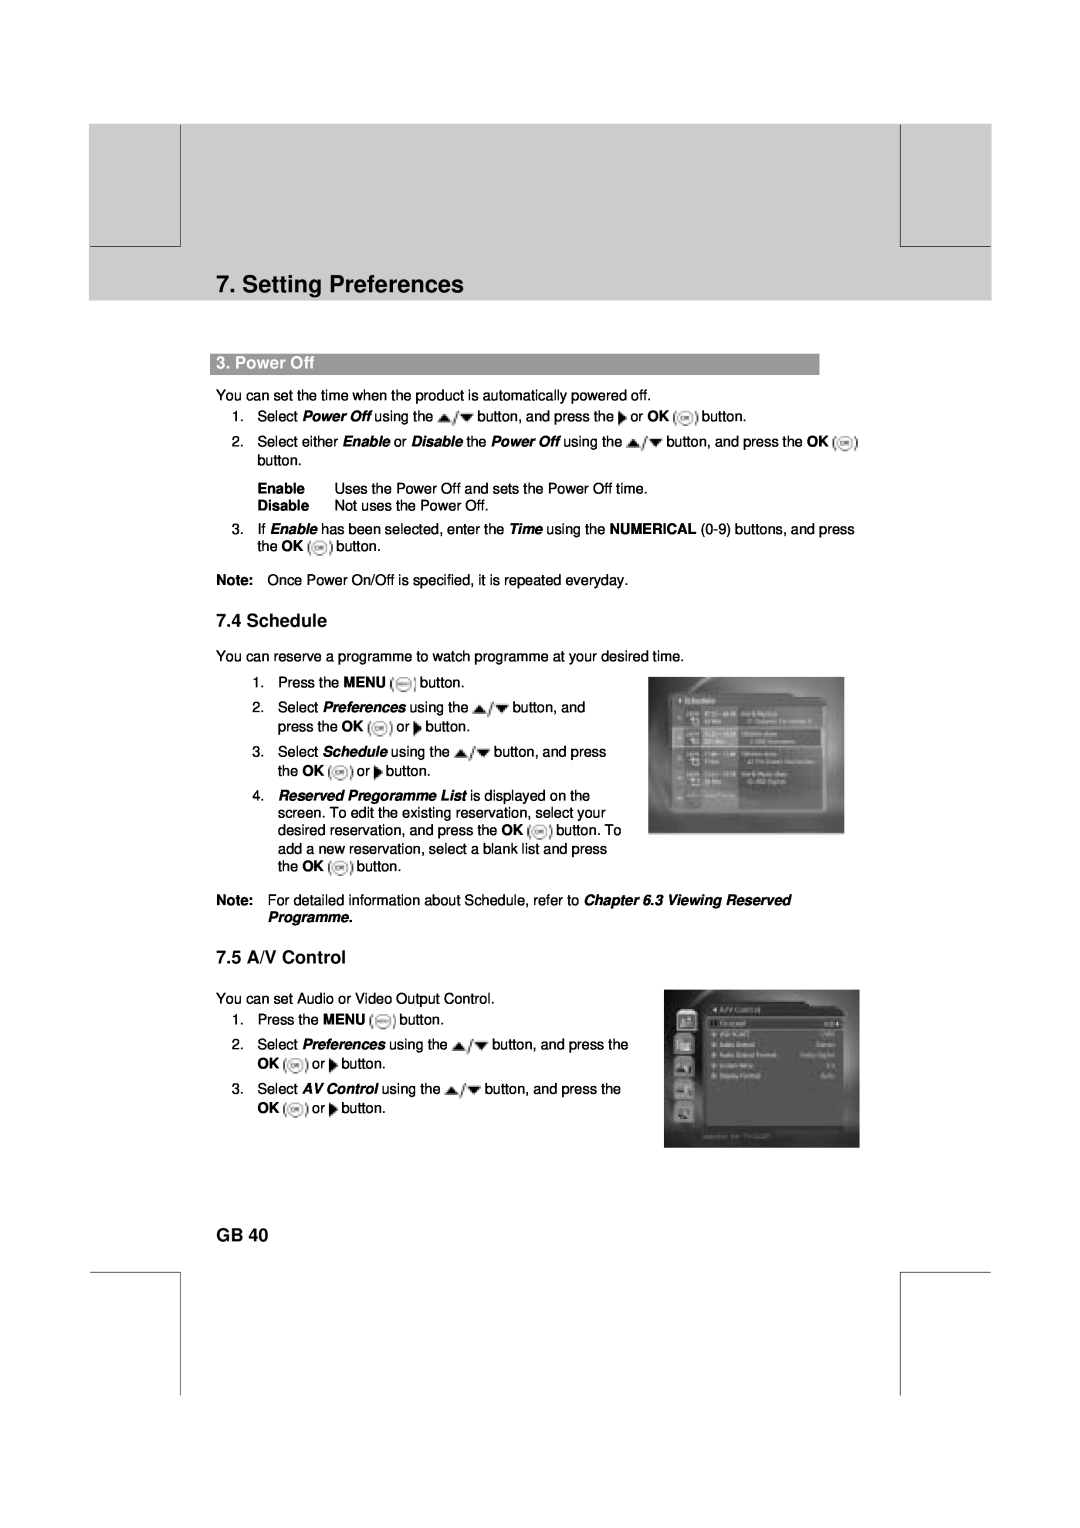 Humax VA-FOX T manual Schedule, 7.5 A/V Control, Power Off, Setting Preferences 